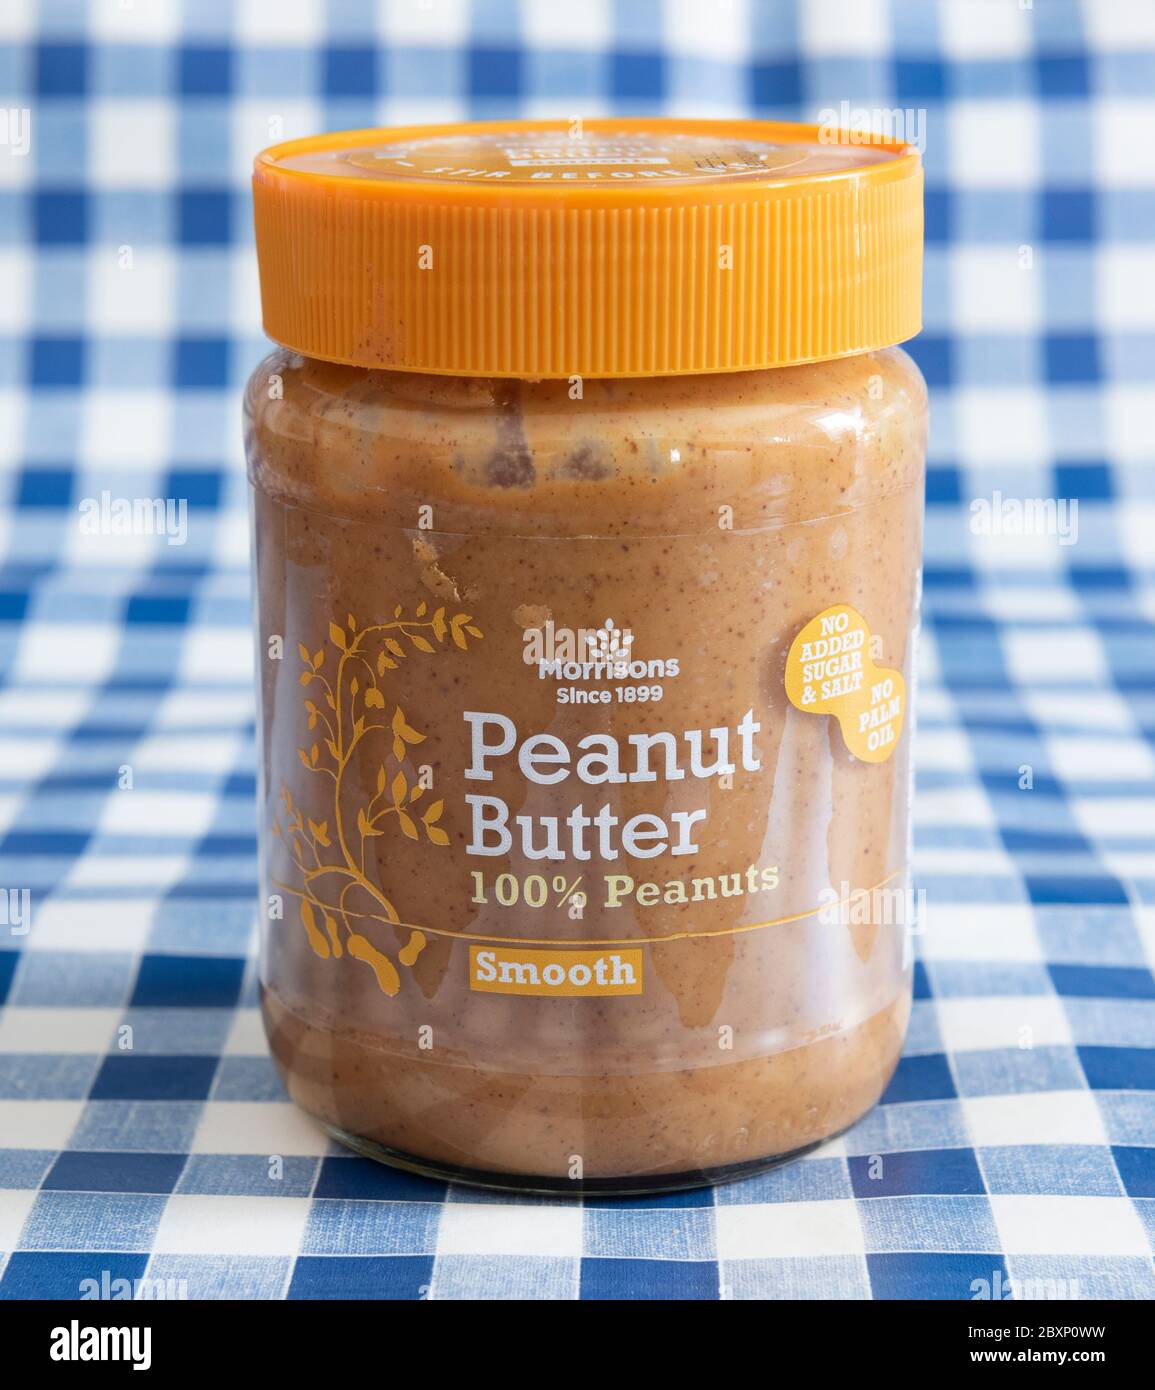 https://c8.alamy.com/comp/2BXP0WW/a-jar-of-morrisons-smooth-peanut-butter-2BXP0WW.jpg